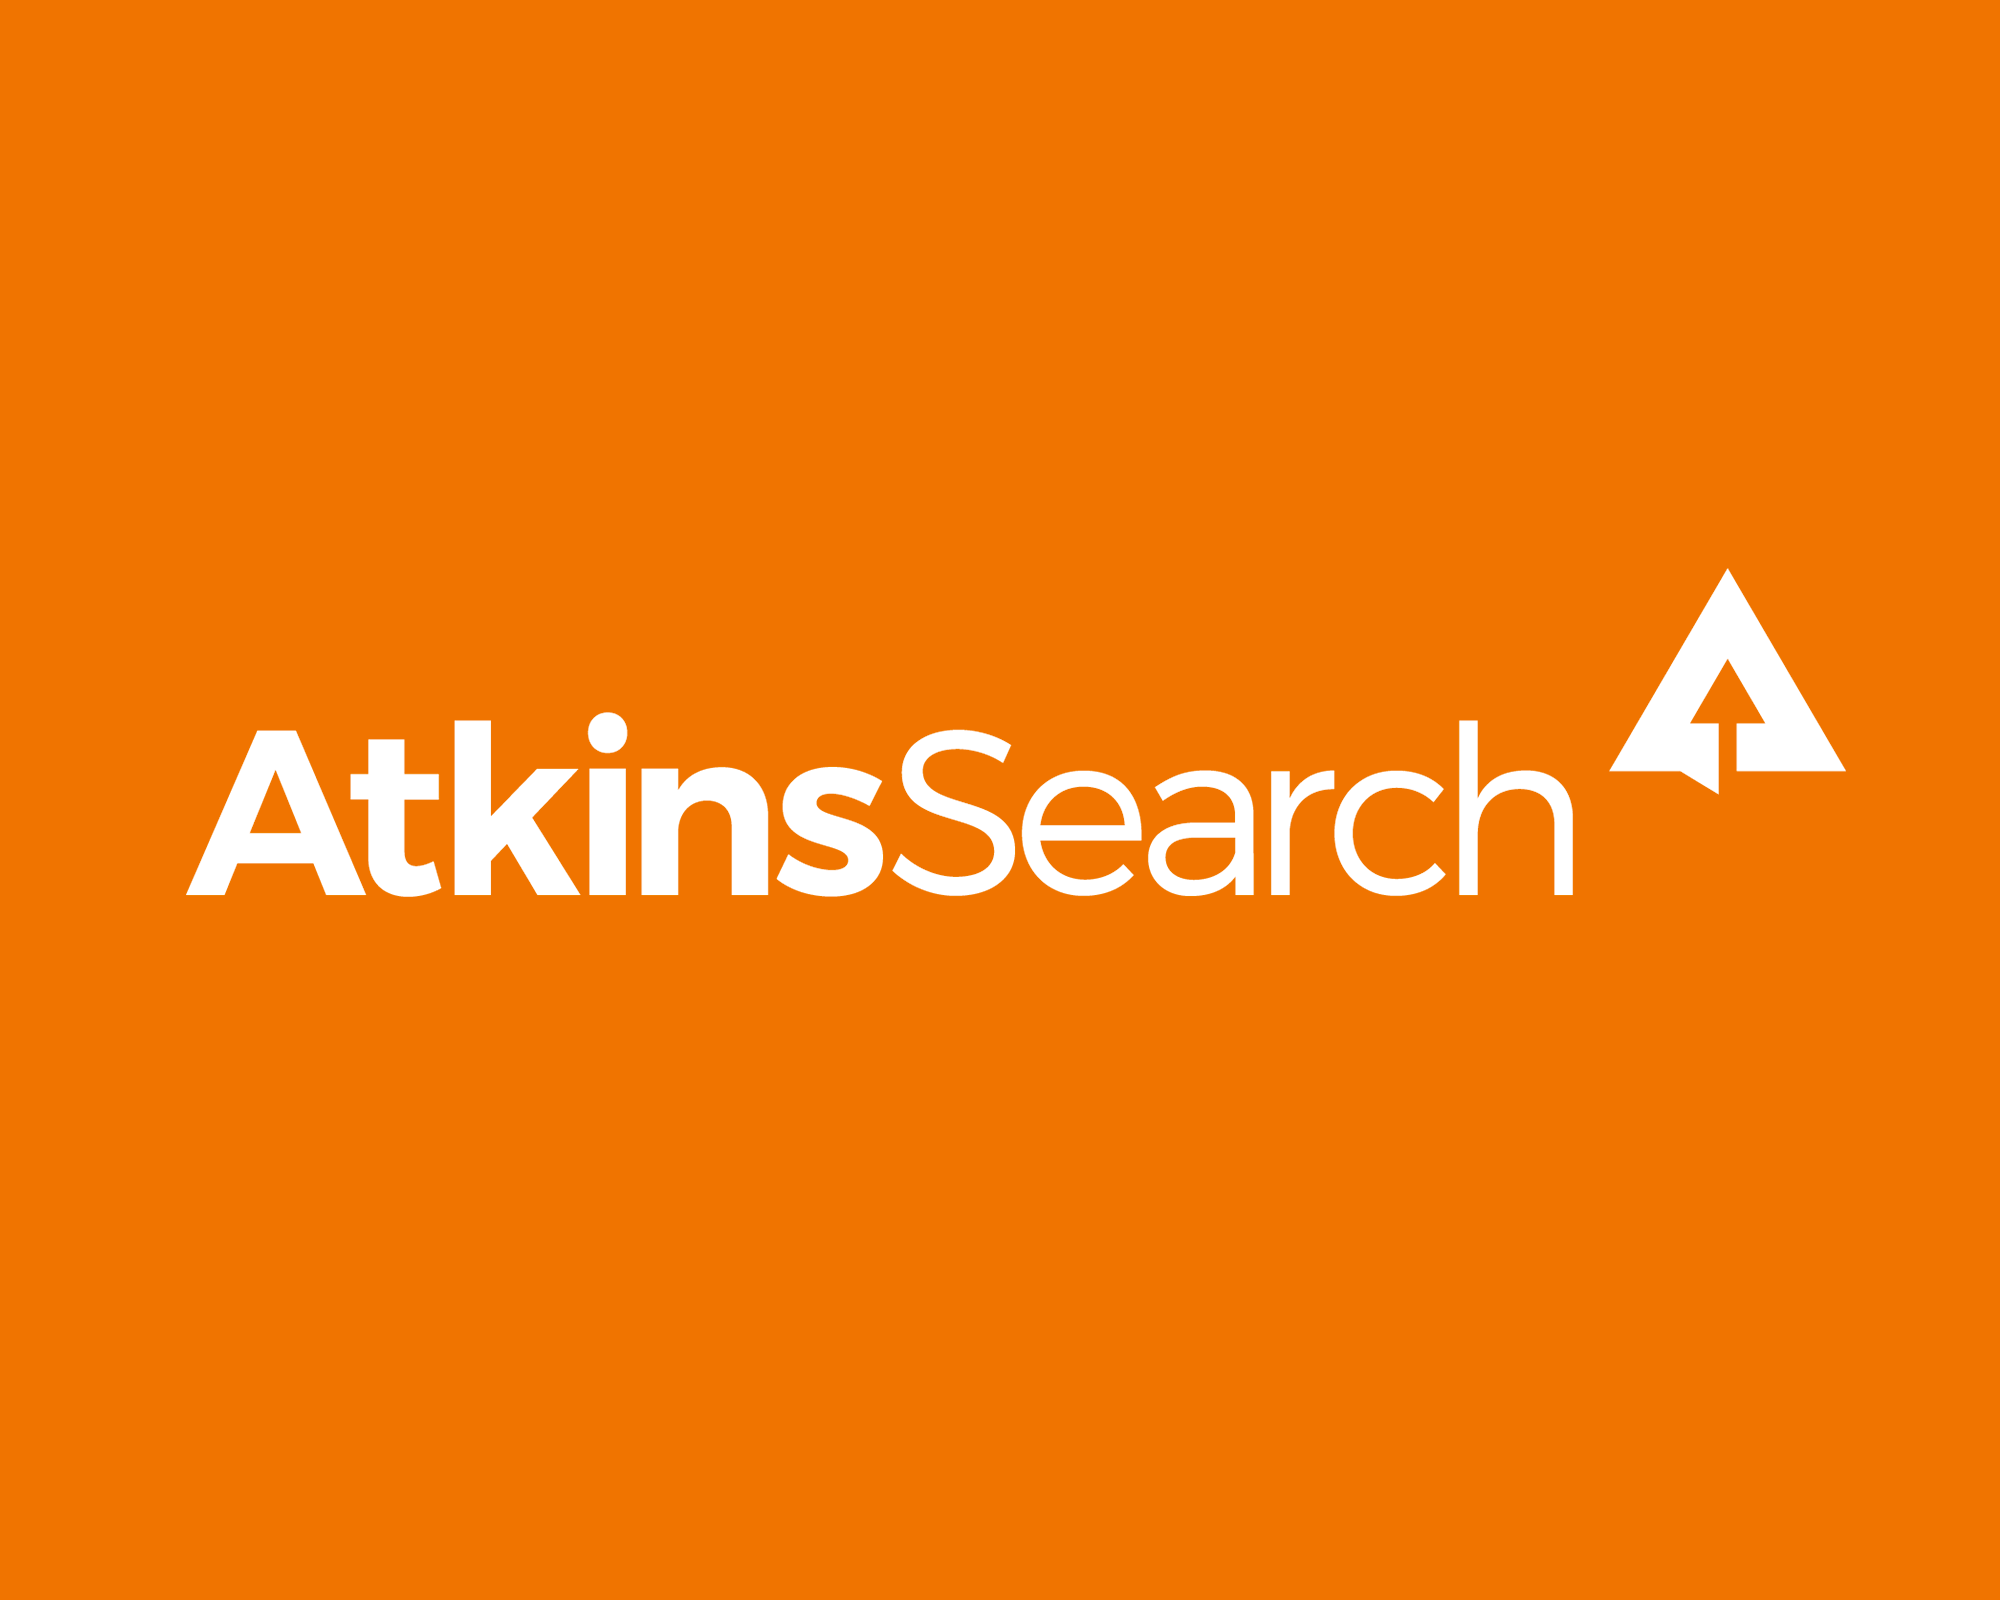 Download Atkins Temptec Logo Png Transparent - Cooper Atkins PNG Image with  No Background - PNGkey.com